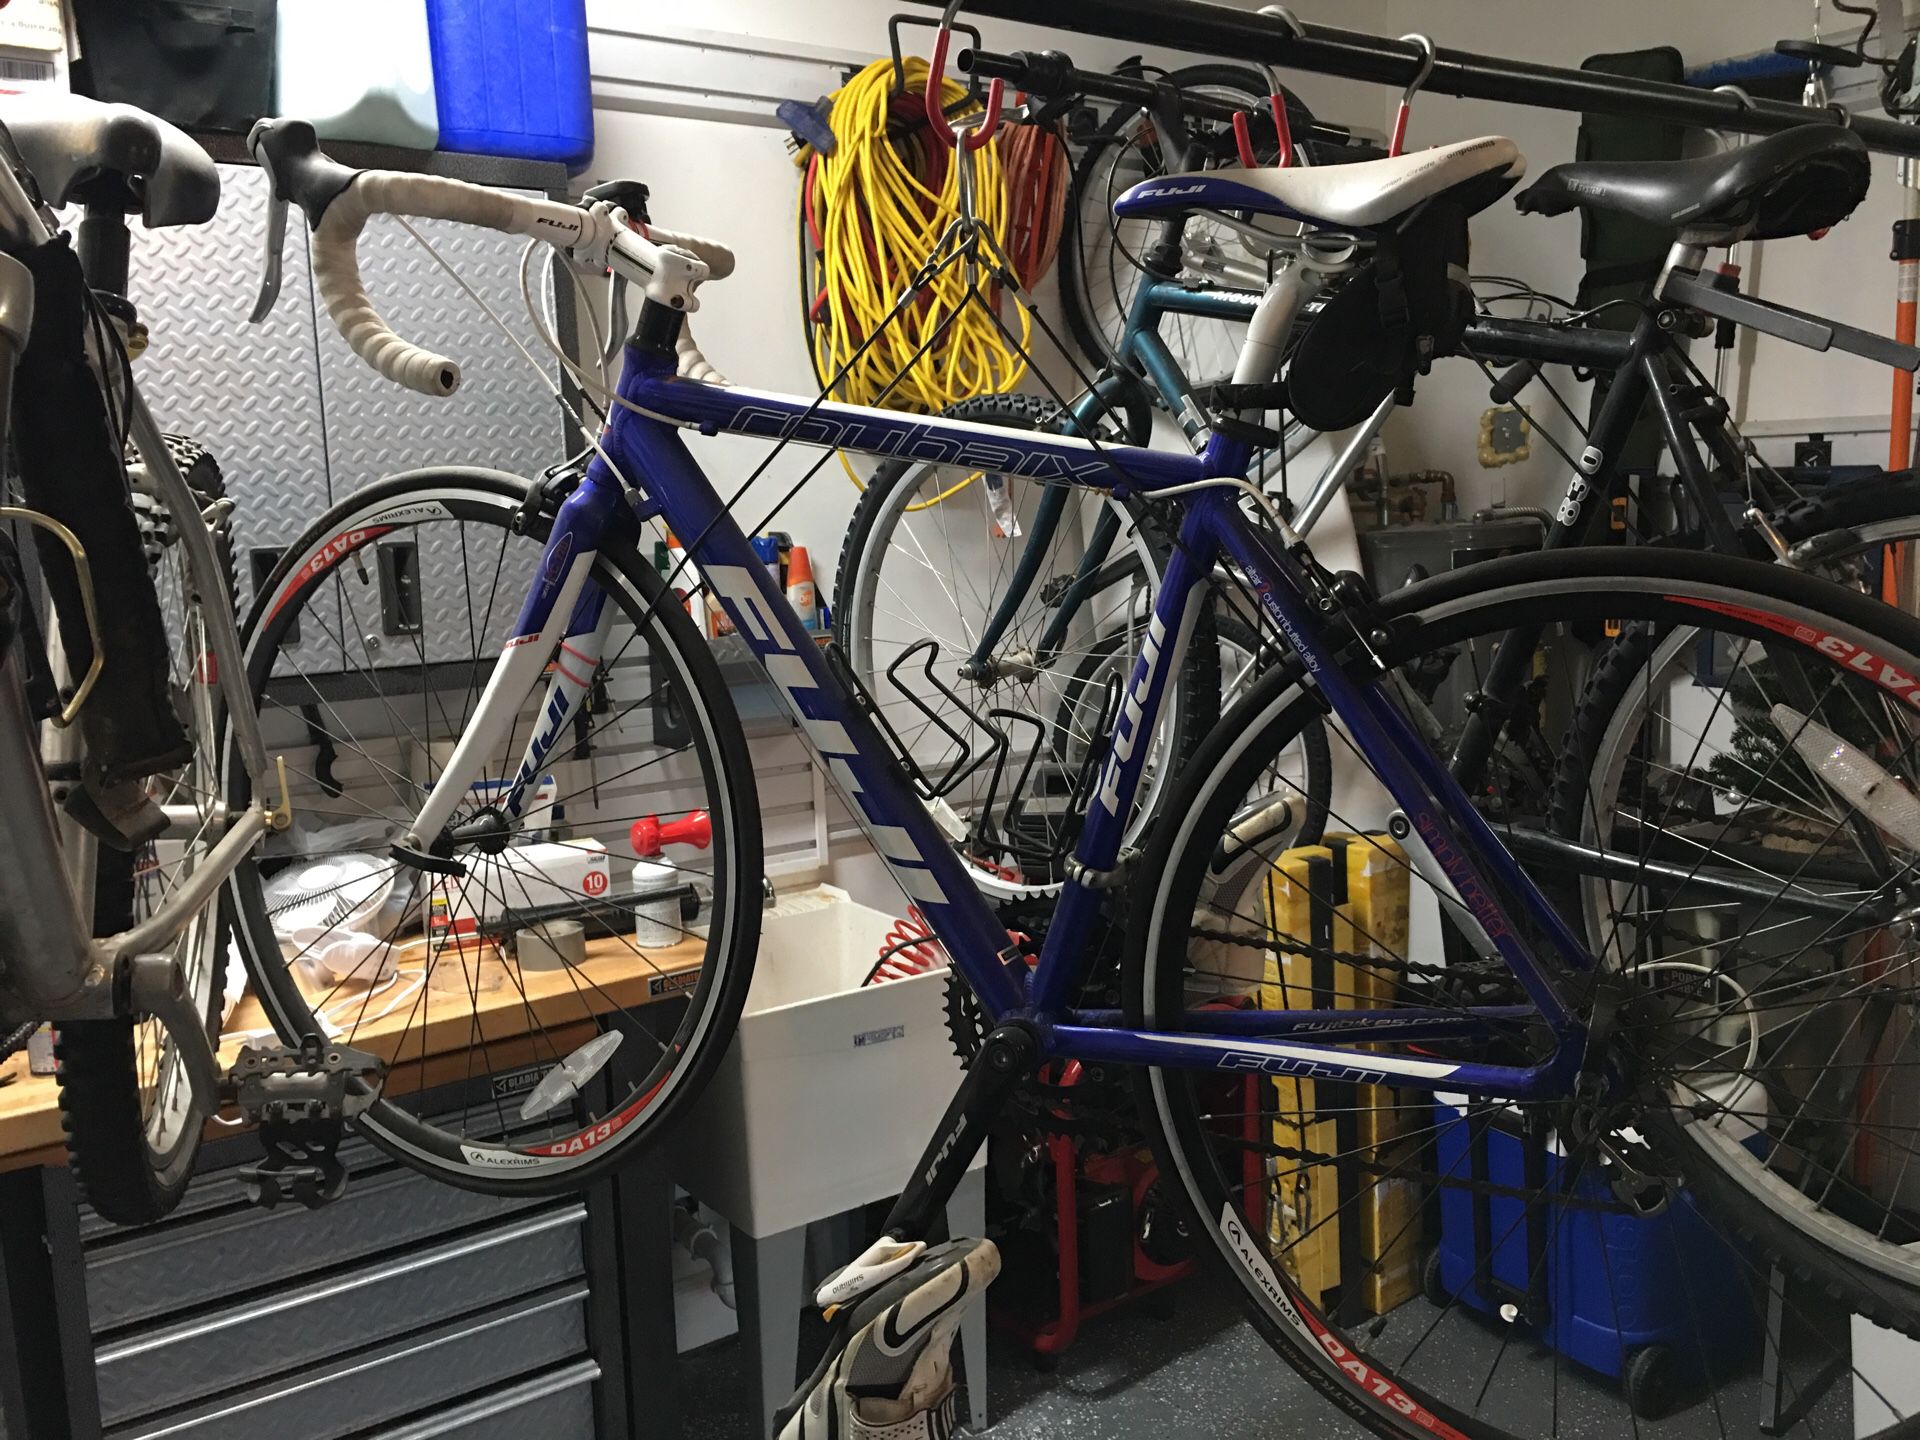 Fuji Fc 770 Carbon Bonded Race Bike Trainer For Sale In Vlg Wellingtn Fl Offerup